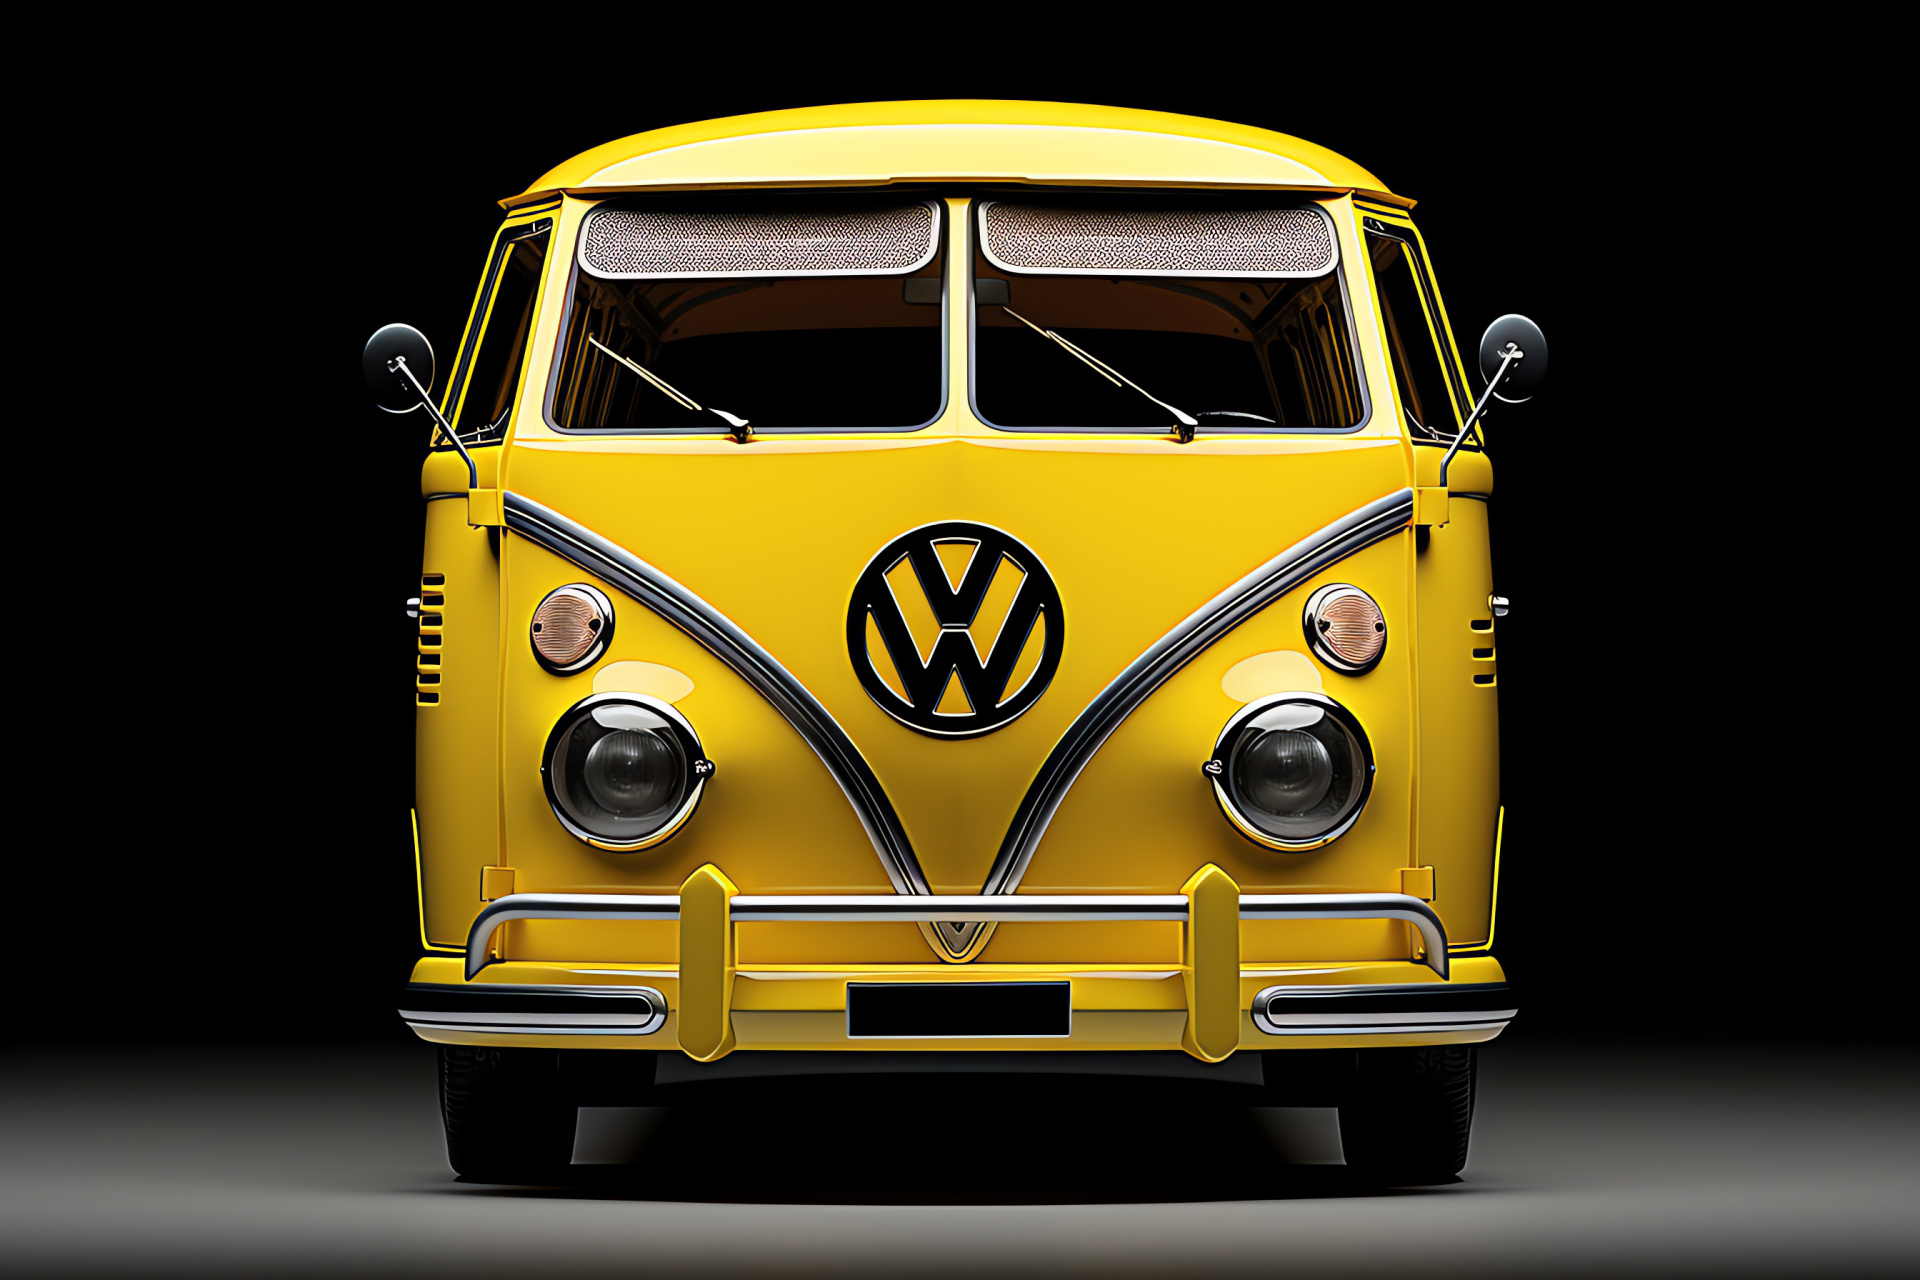 VW Bus T1 Panel Van, lemon yellow brilliance, viewpoint from above, obsidian contrast, HD Desktop Wallpaper